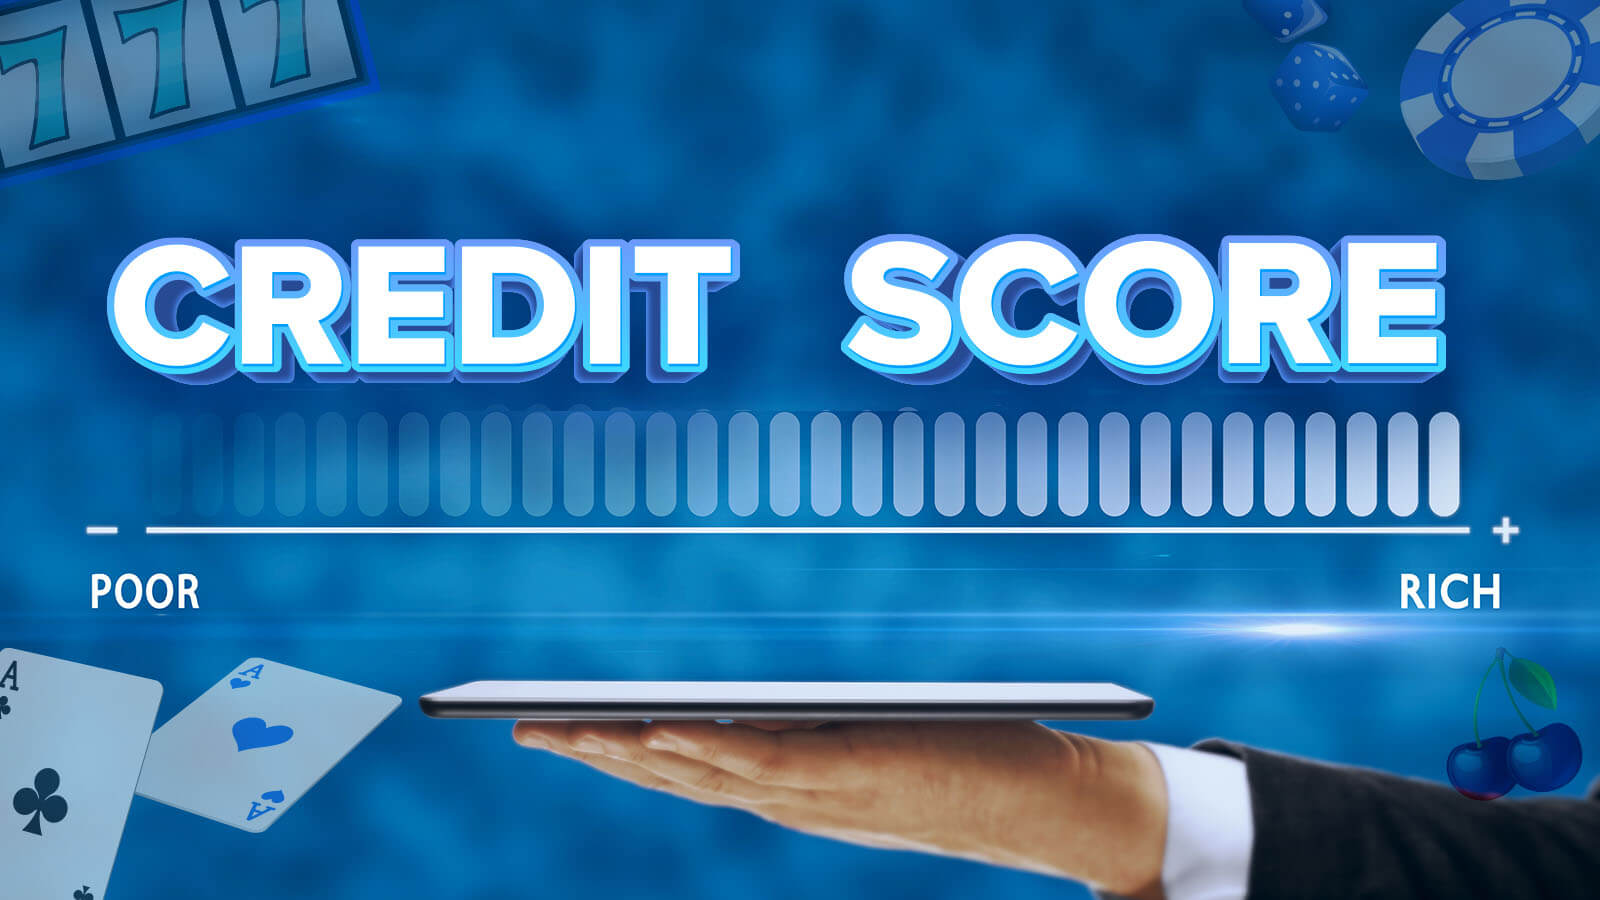 Gambling and Credit Score Relation